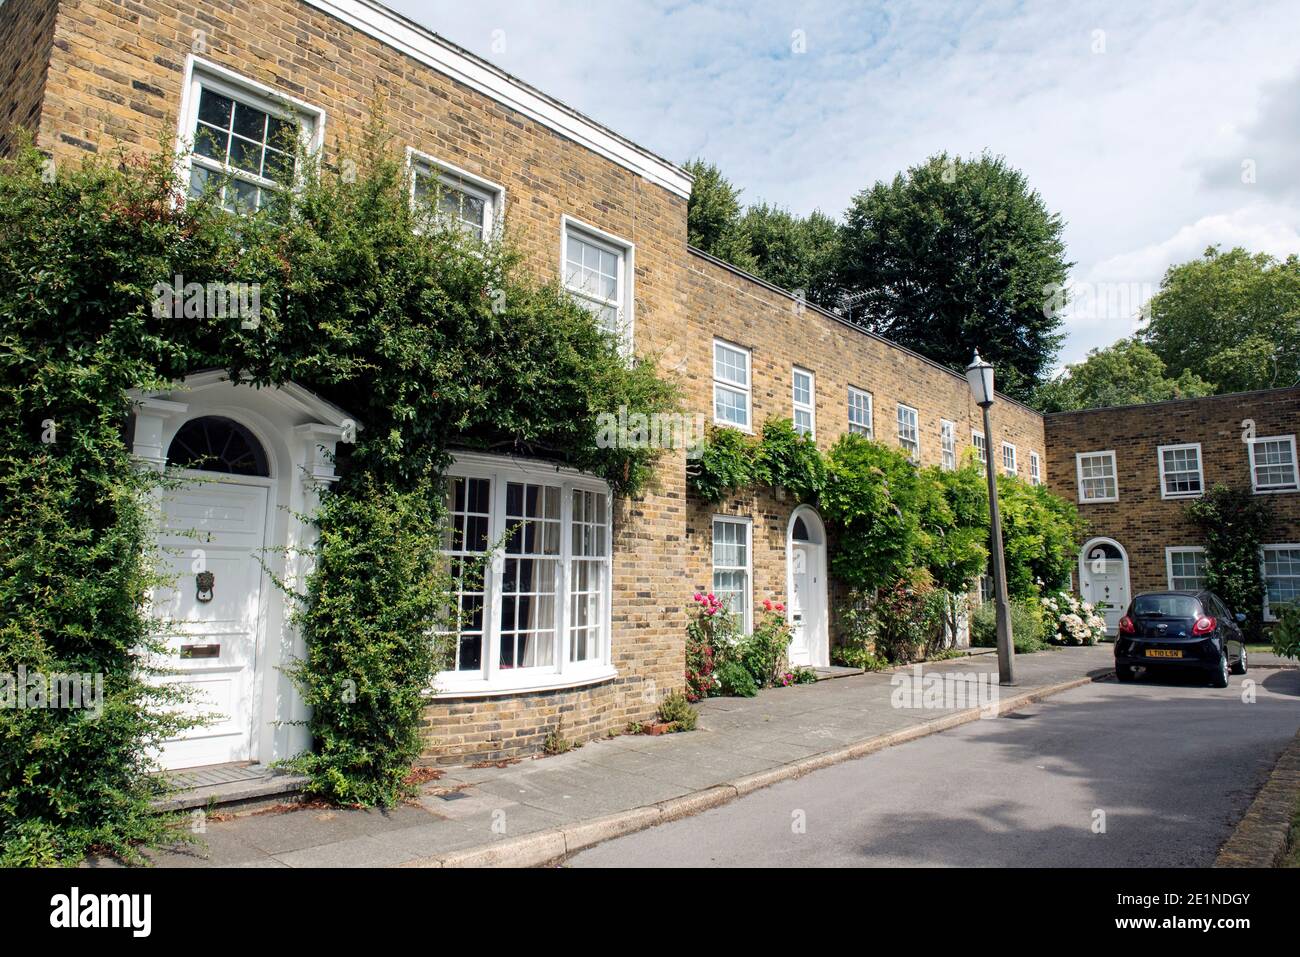 Atractivas casas con terrazas neogoranas, John Spencer Square Canonbury London Borough of Islington Foto de stock